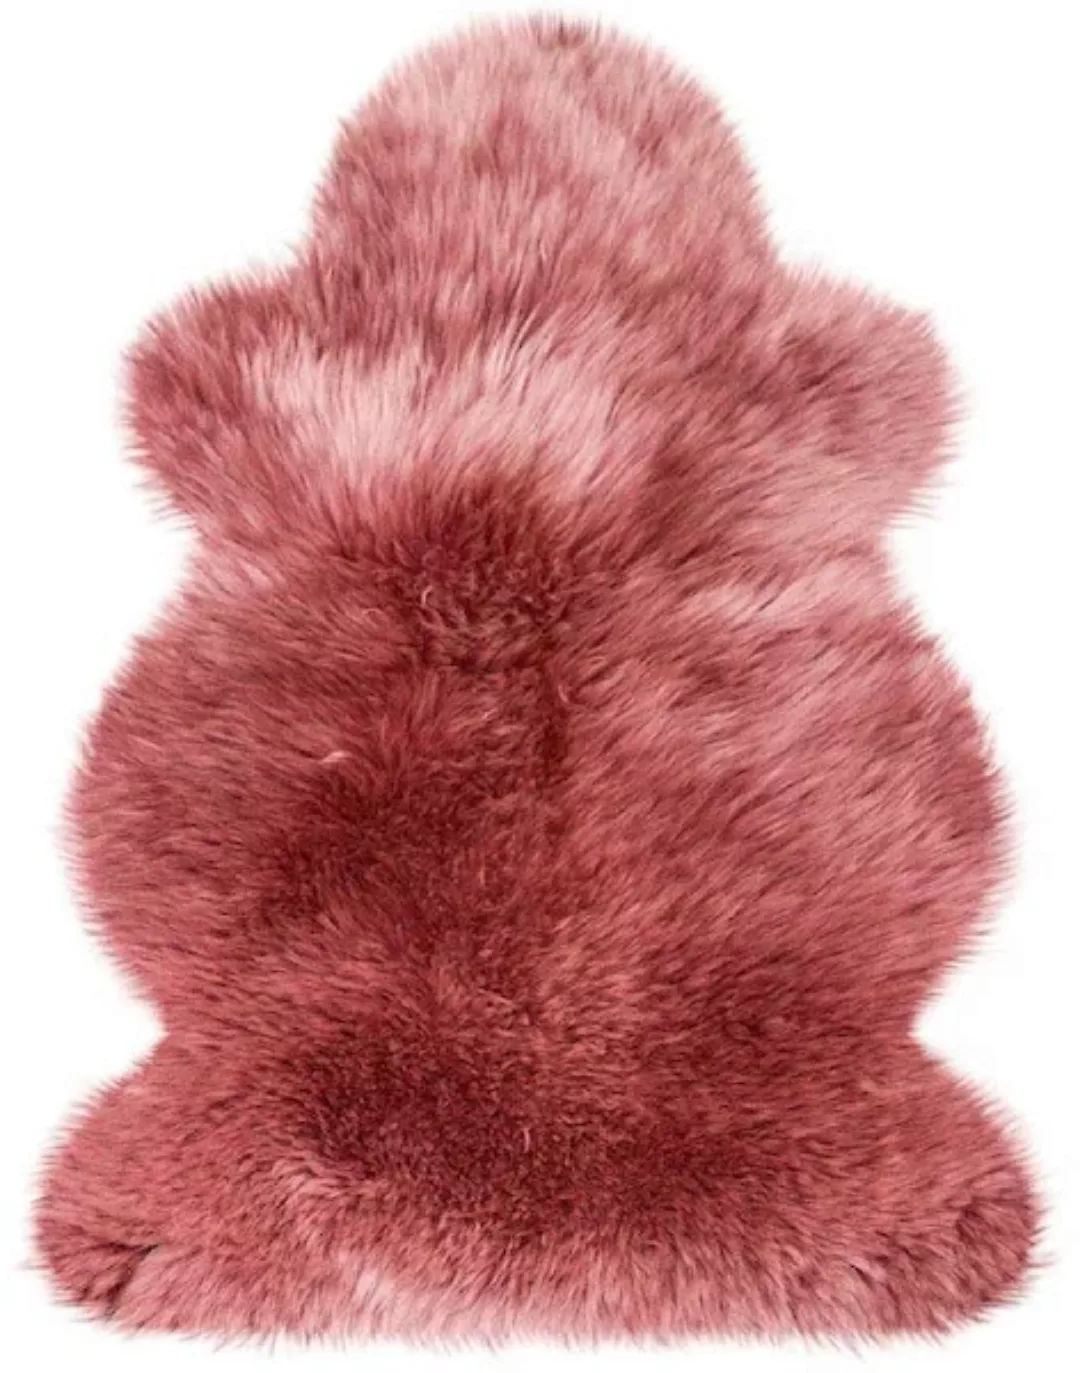 HOME STORY Australisches Lammfell - rosa/pink - Schaffell - 68 cm - Sconto günstig online kaufen